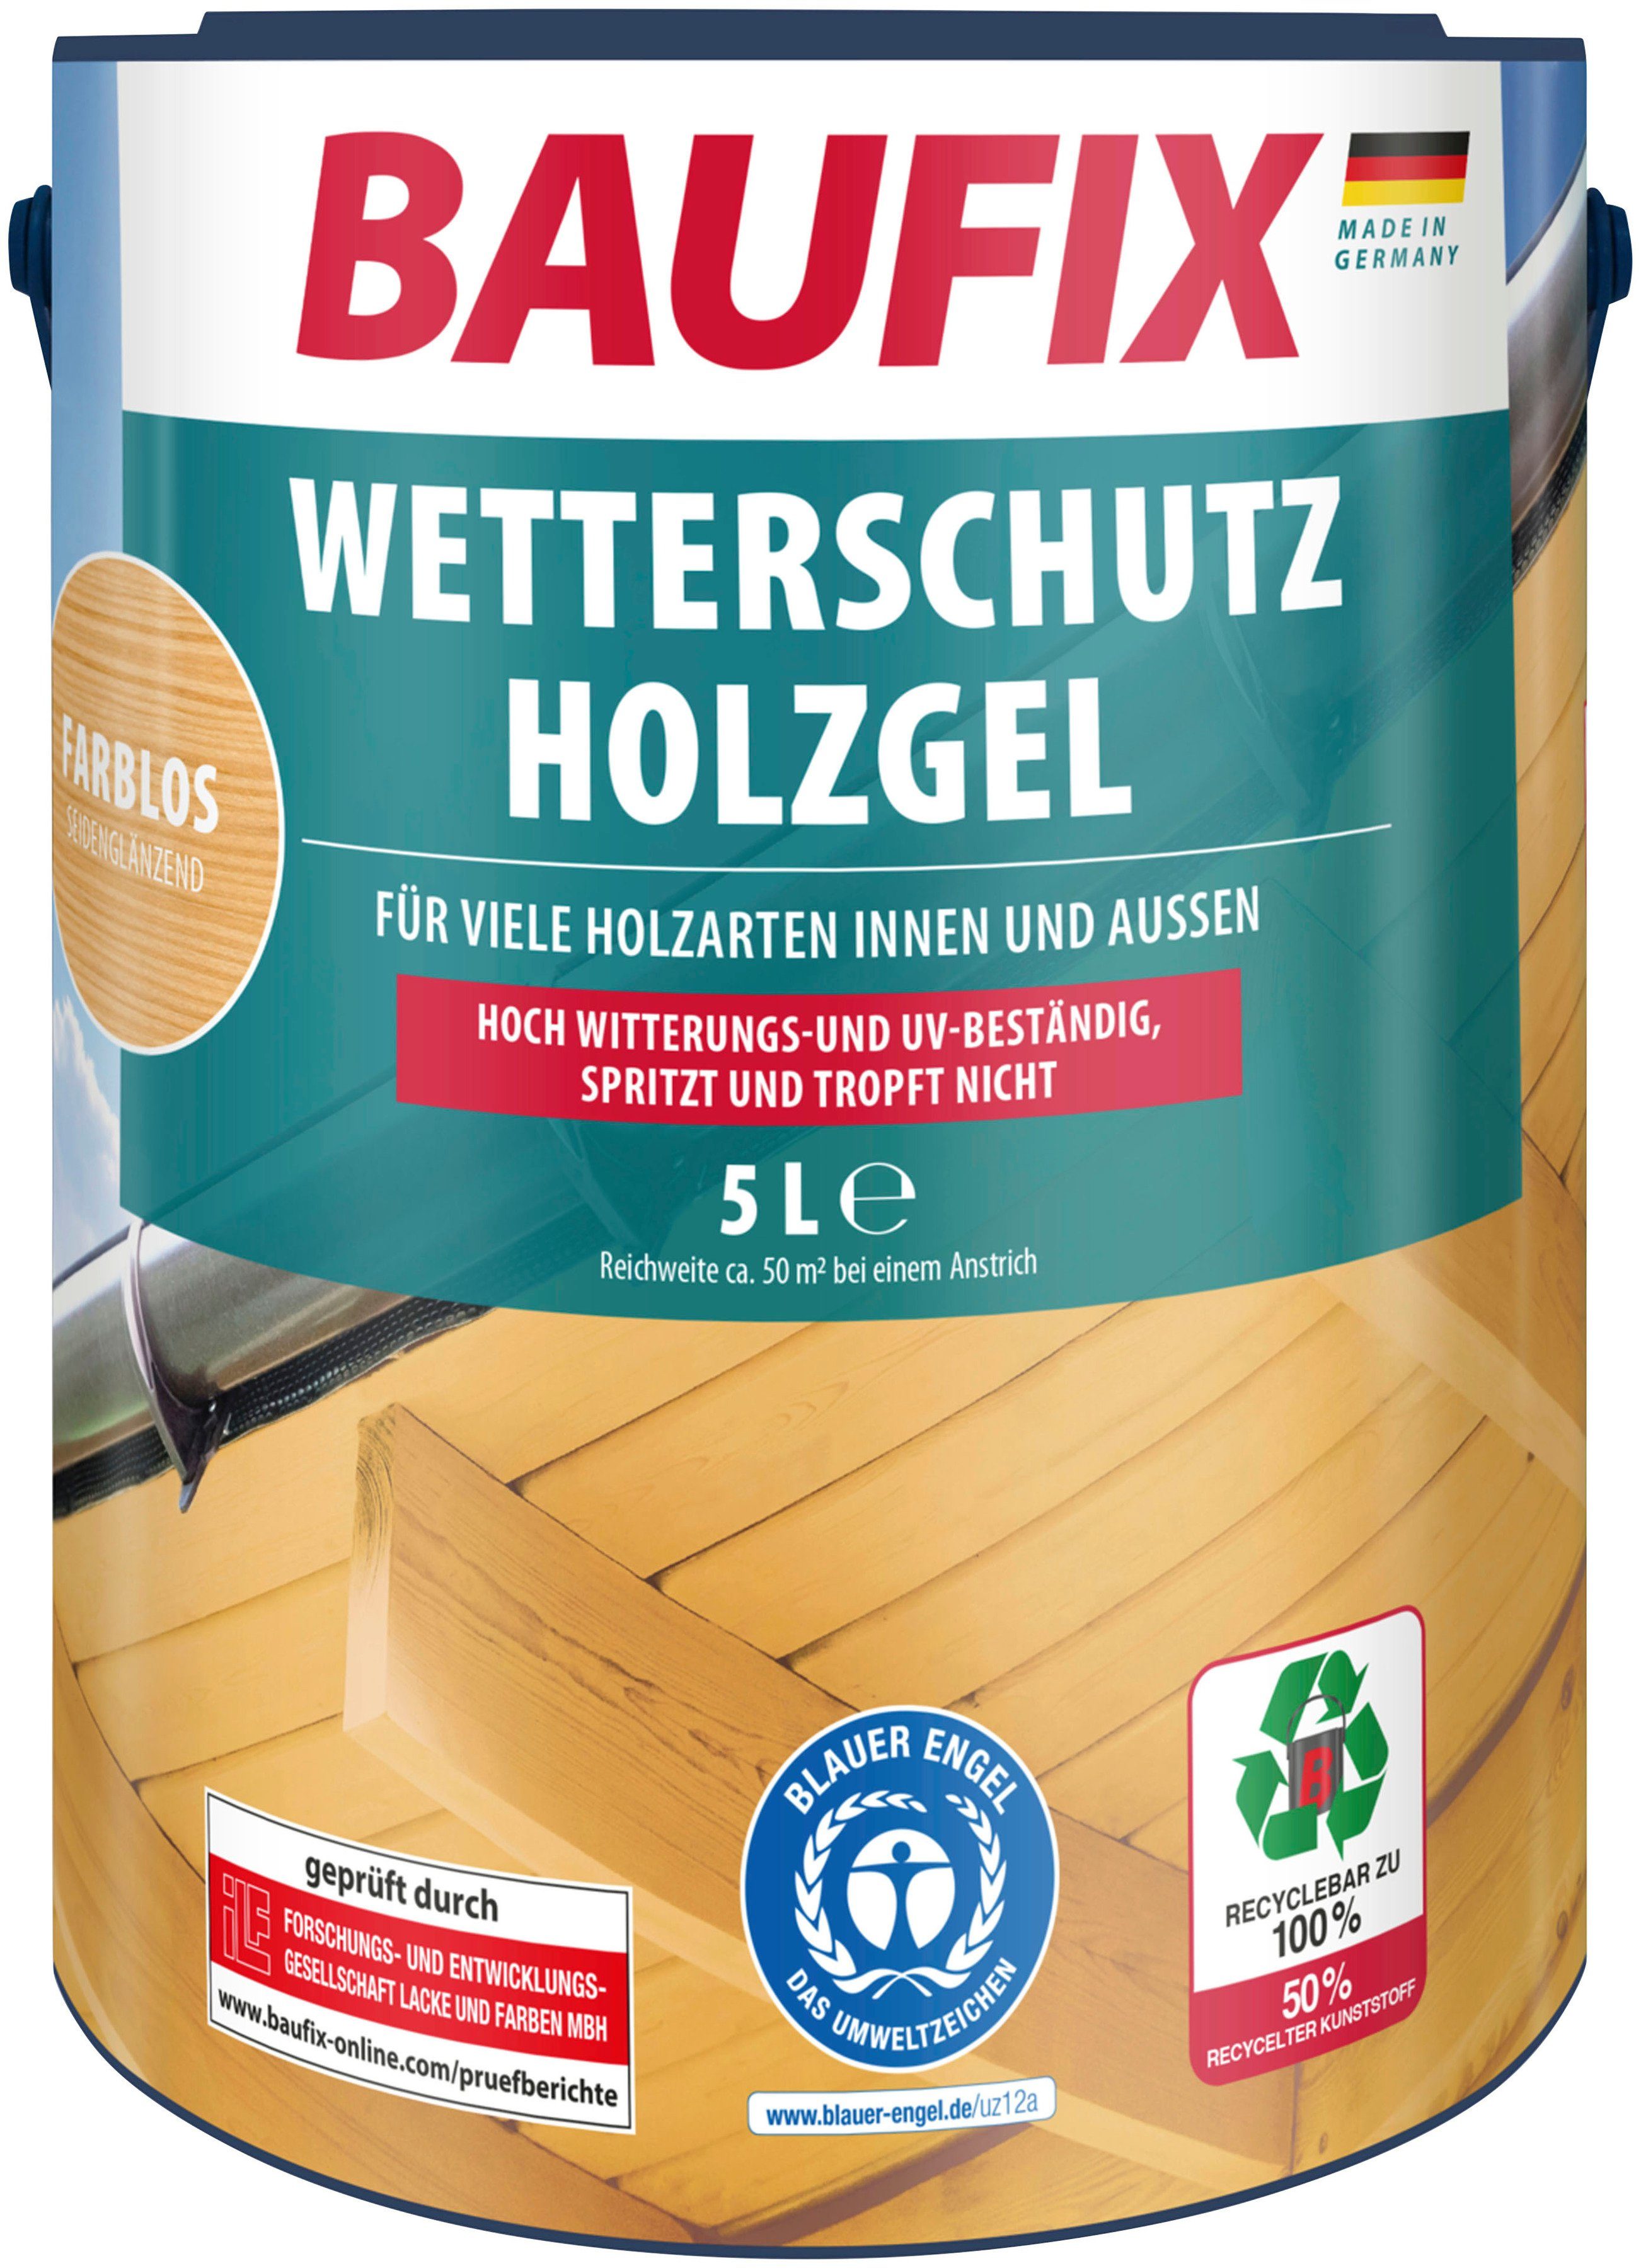 Baufix Holzschutzlasur Wetterschutz-Holzgel, wetterbeständig, UV beständig, atmungsaktiv, 5L, seidenglänzend farblos